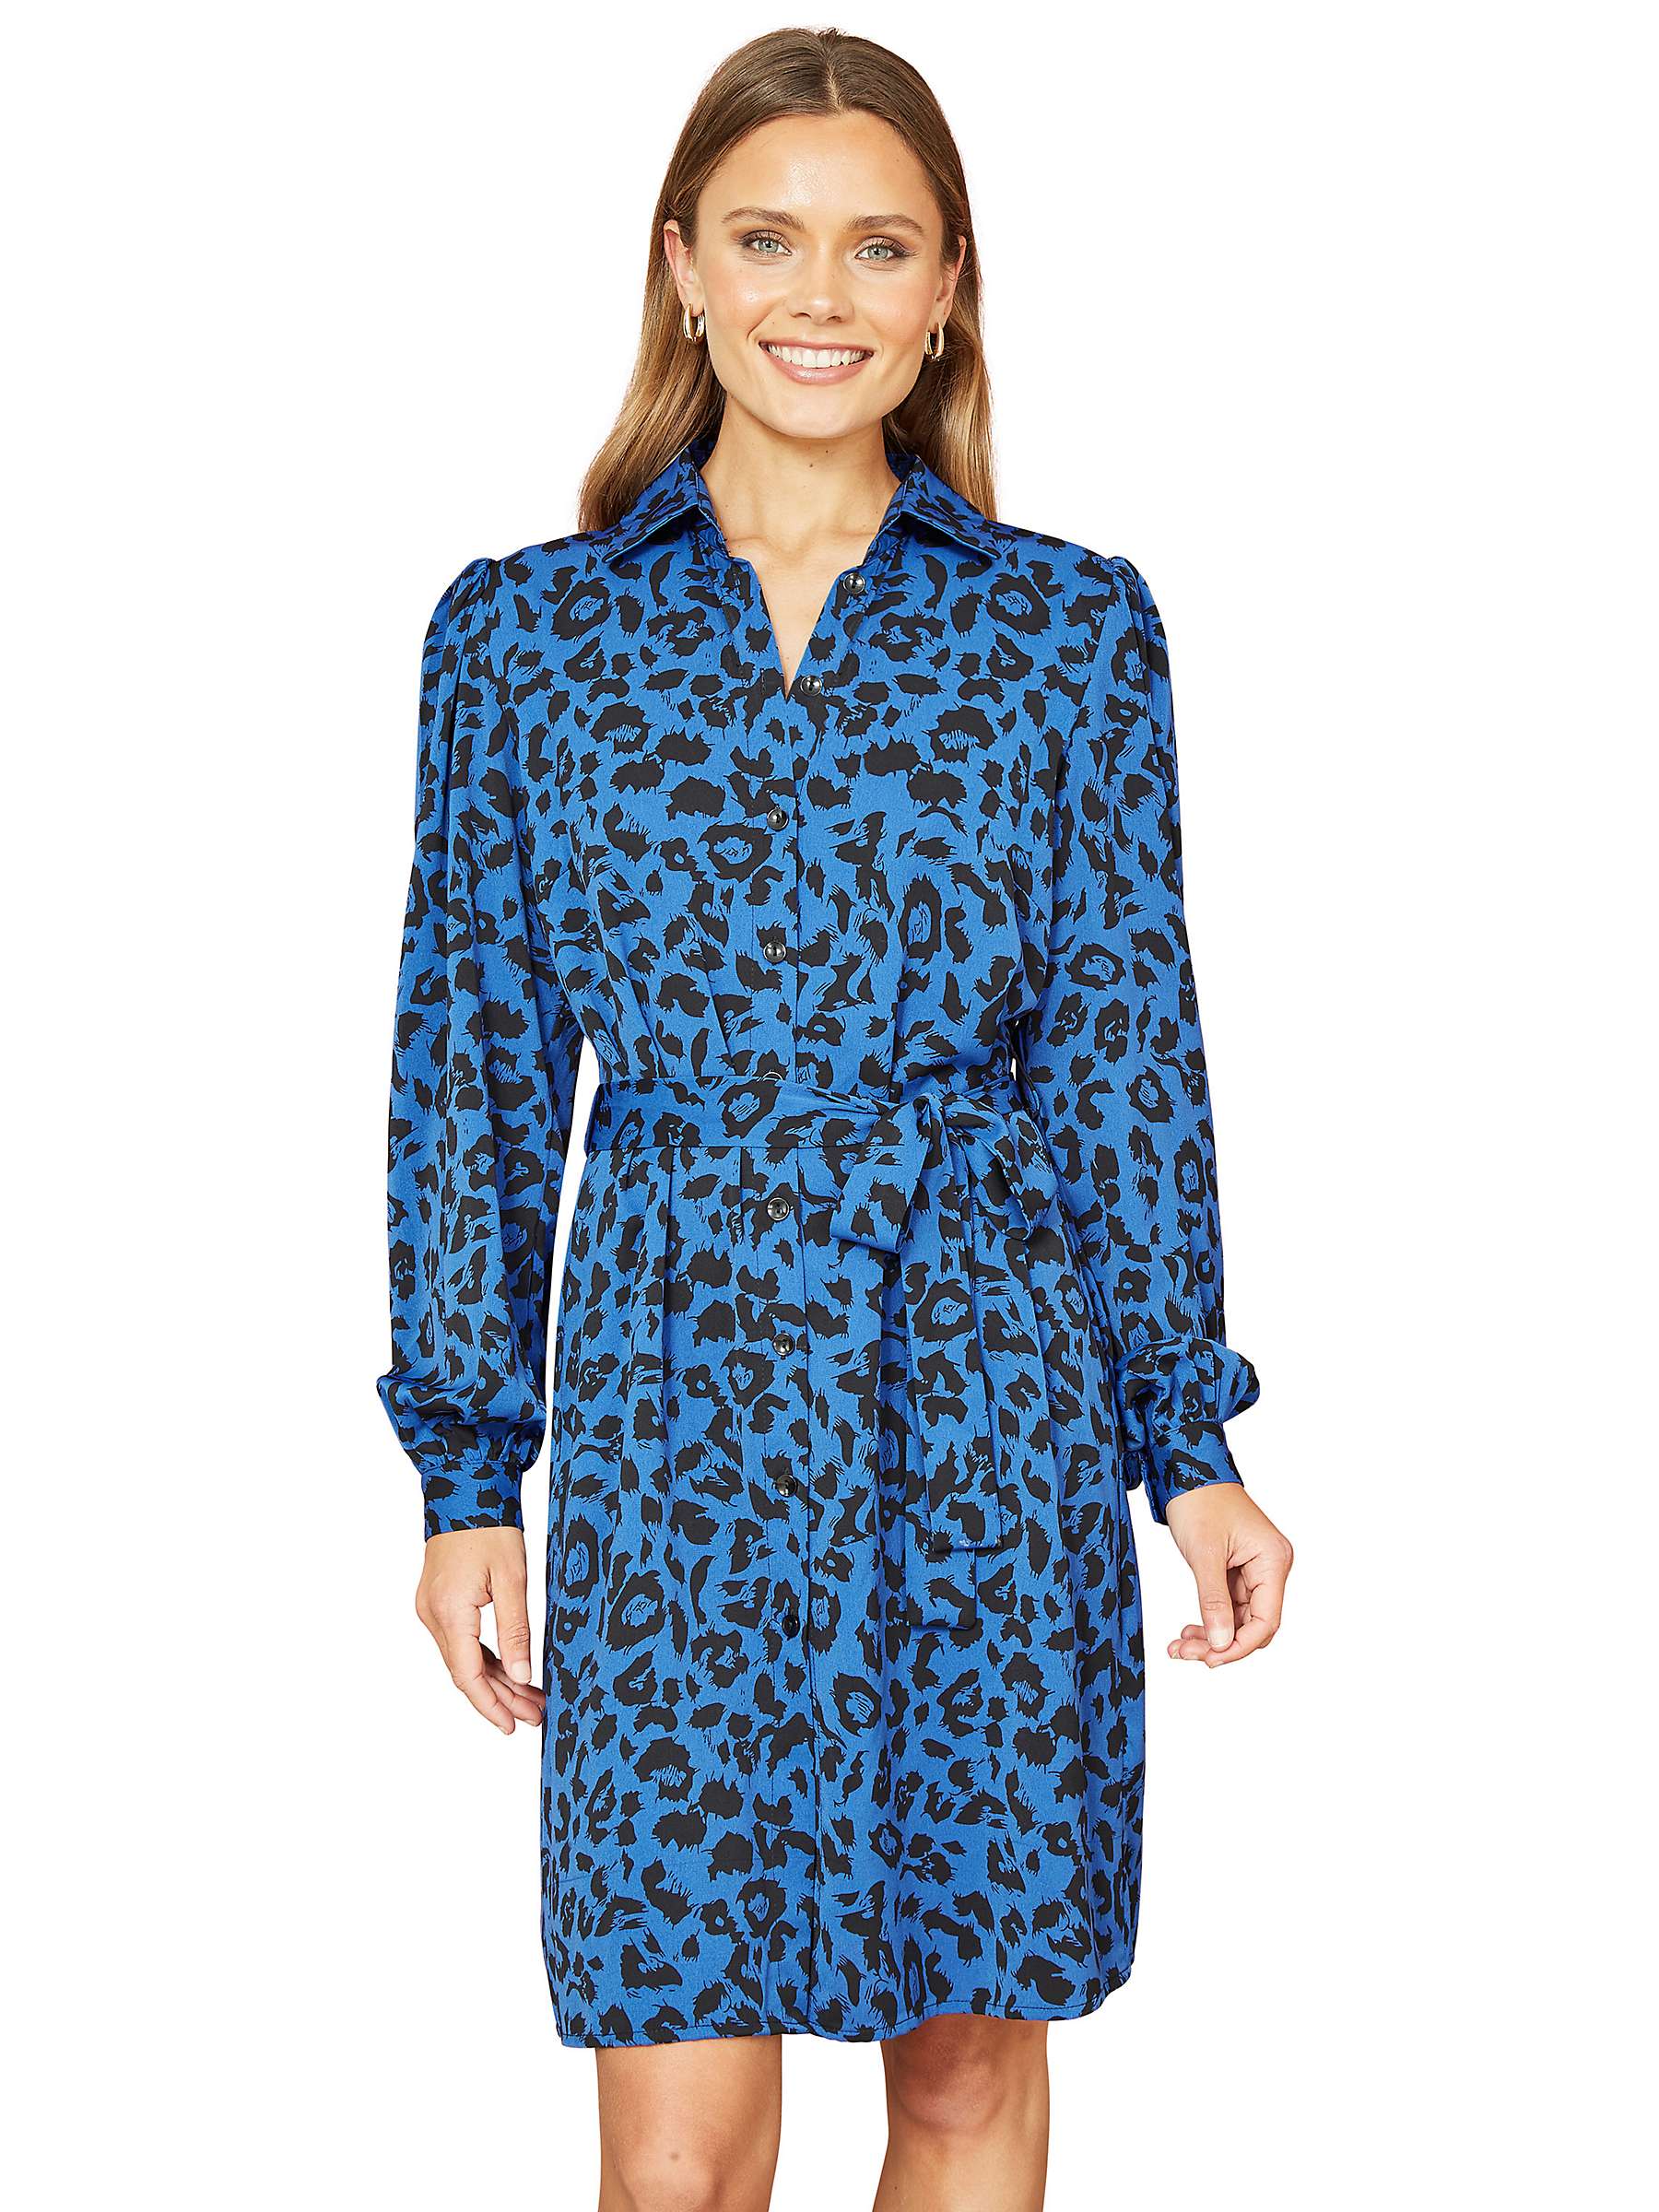 Buy Mela London Animal Print Shirt Dress, Blue/Black Online at johnlewis.com